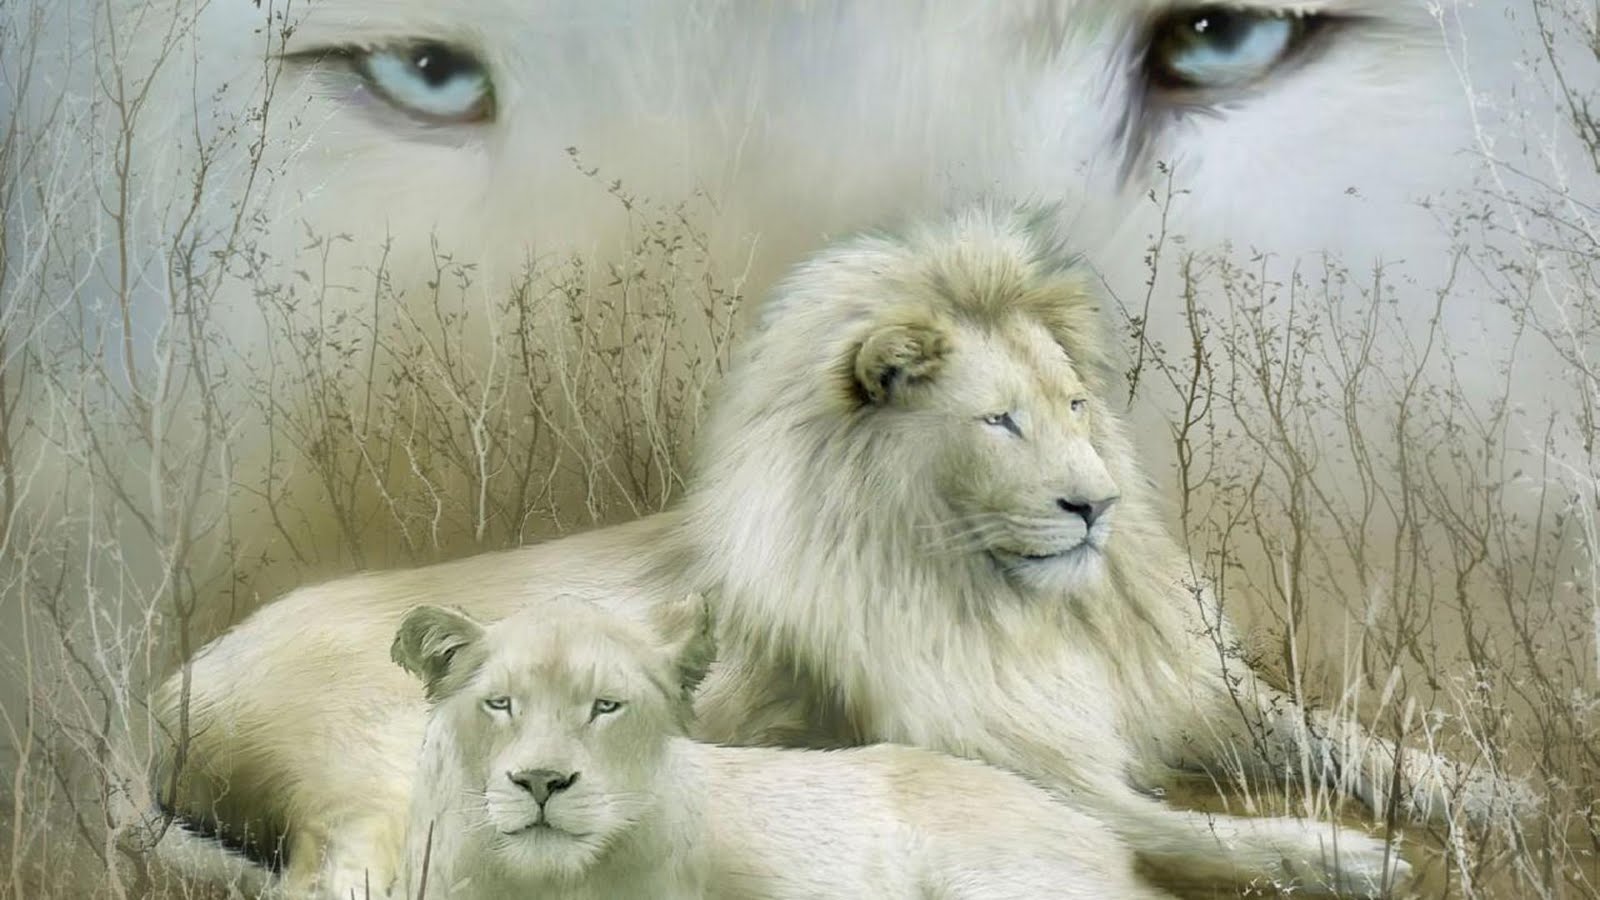 White Lion Wallpaper Desktop 10708 Hd Wallpapers in Animals   Imagesci